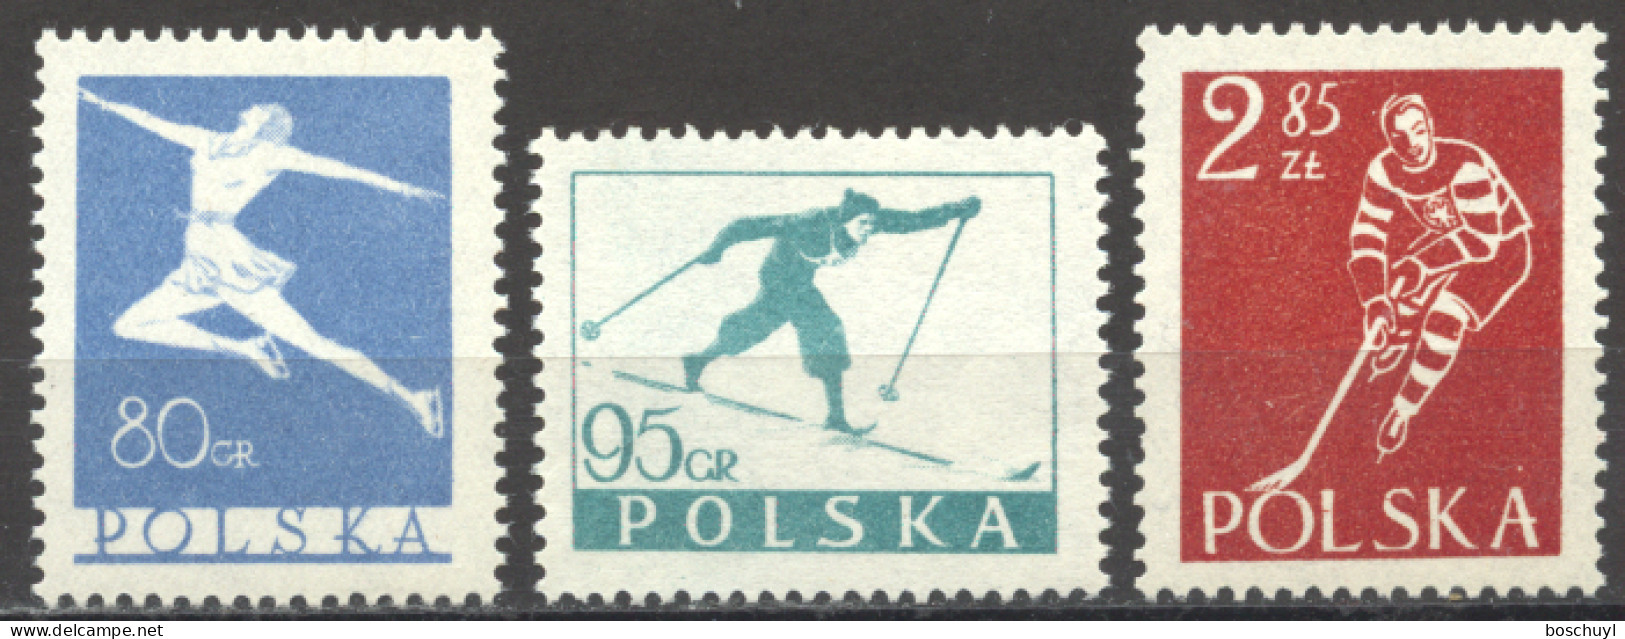 Poland, 1953, Winter Sports, Figure Skating, Skiing, Ice Hockey, MNH, Michel 831-833 - Neufs